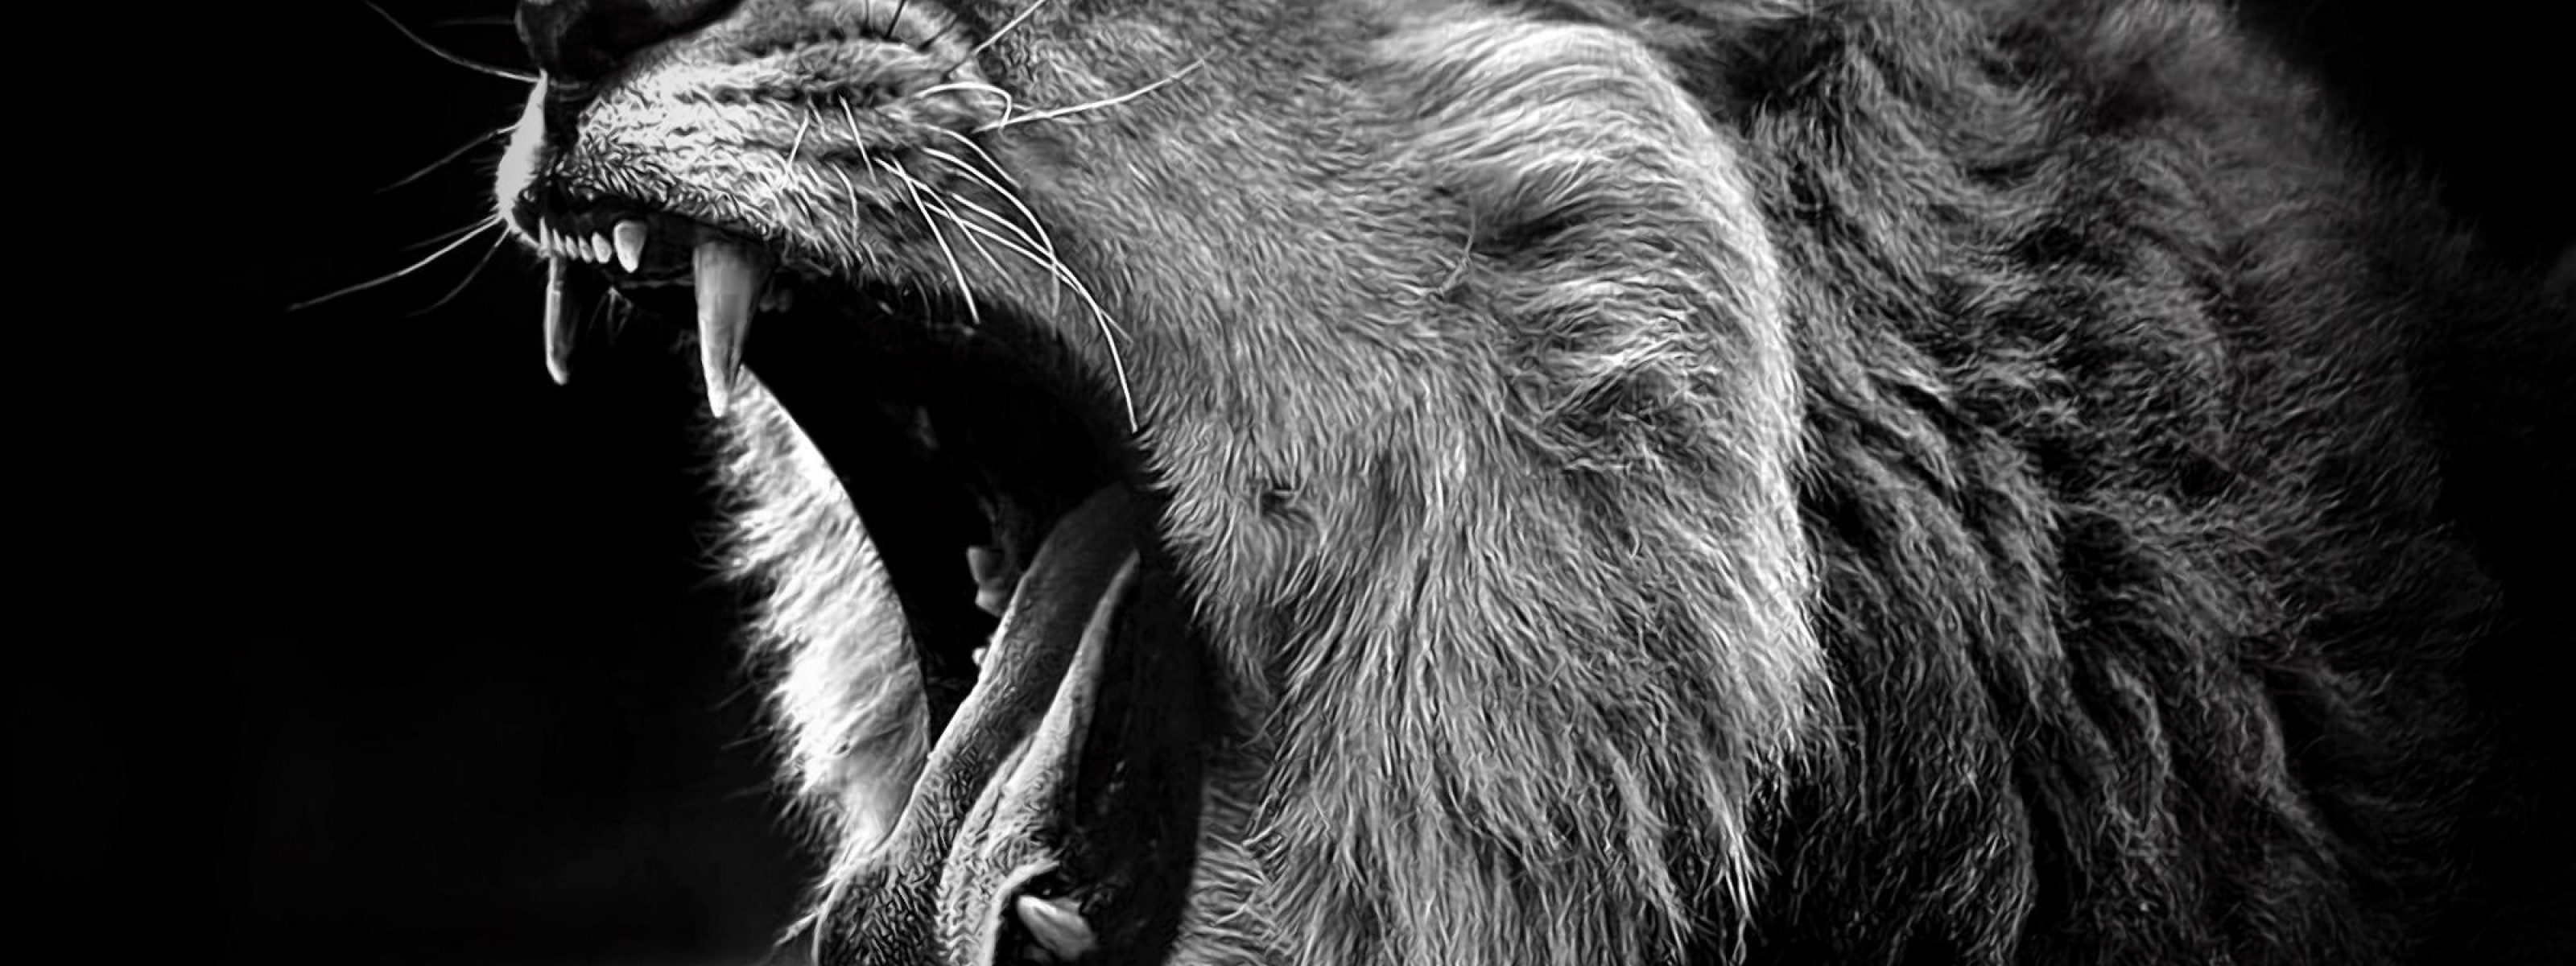 3200x1200 Lion wallpaper black and white hd - photo#19